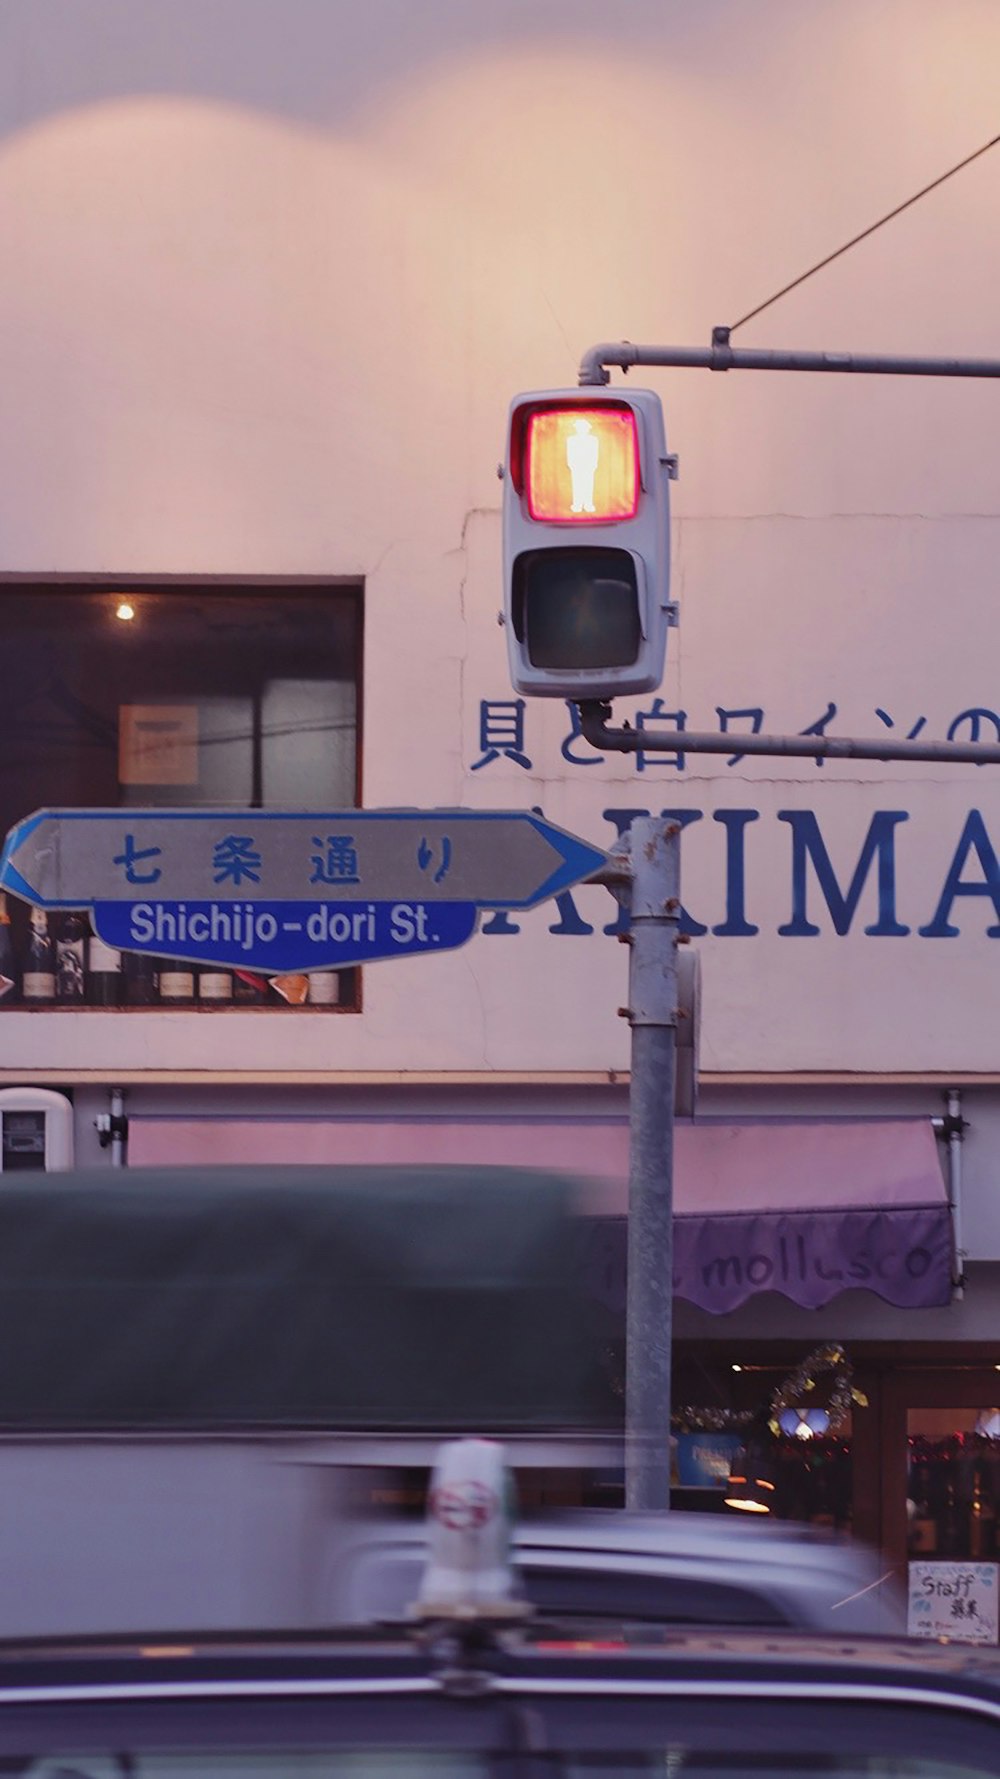 Schijo-Dori St signage